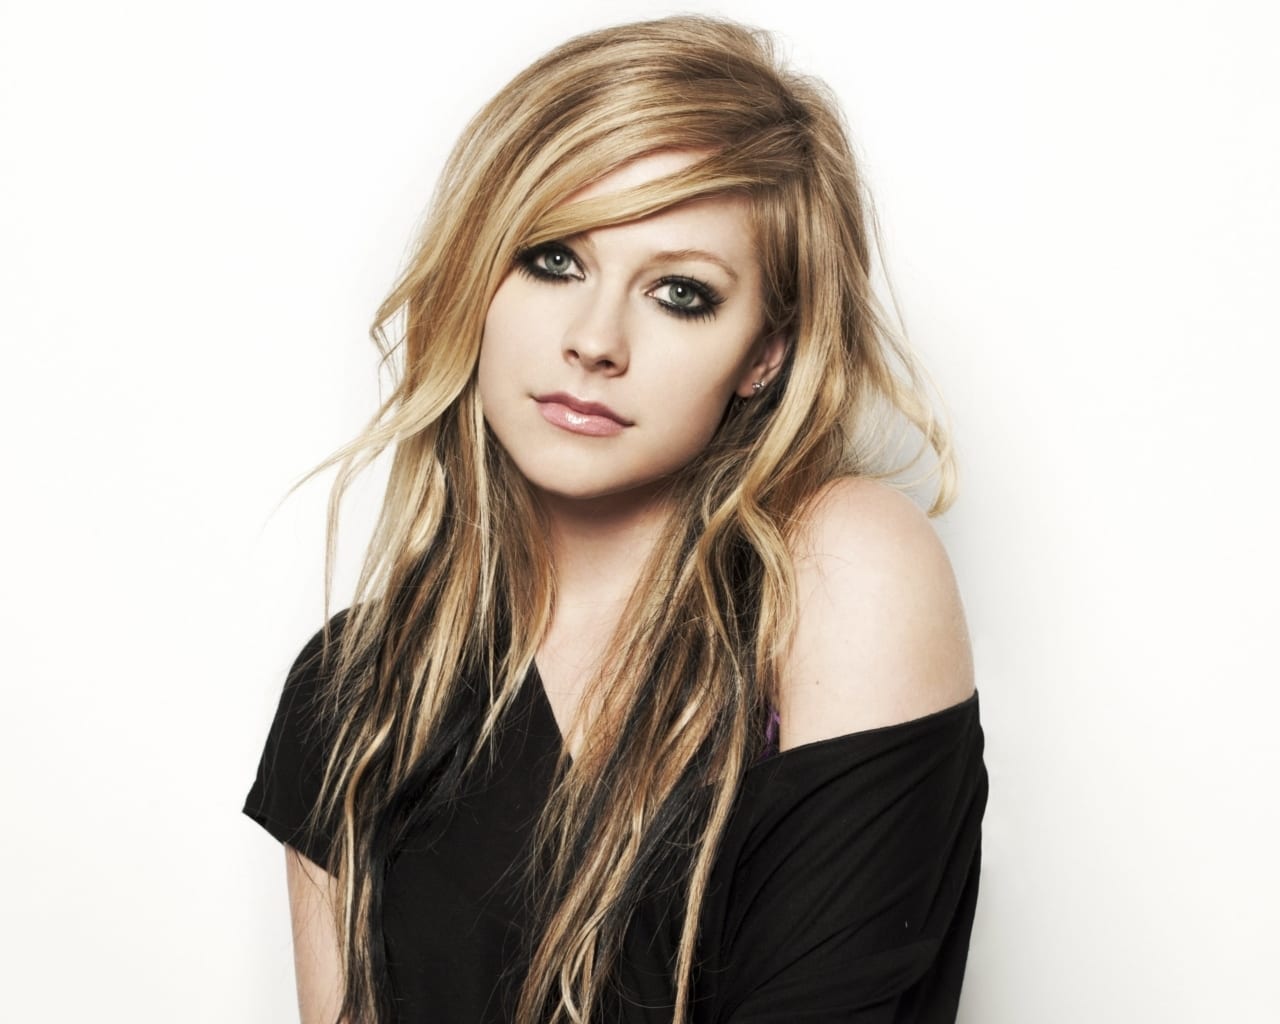 Why Avril Lavigne's Music Sucks